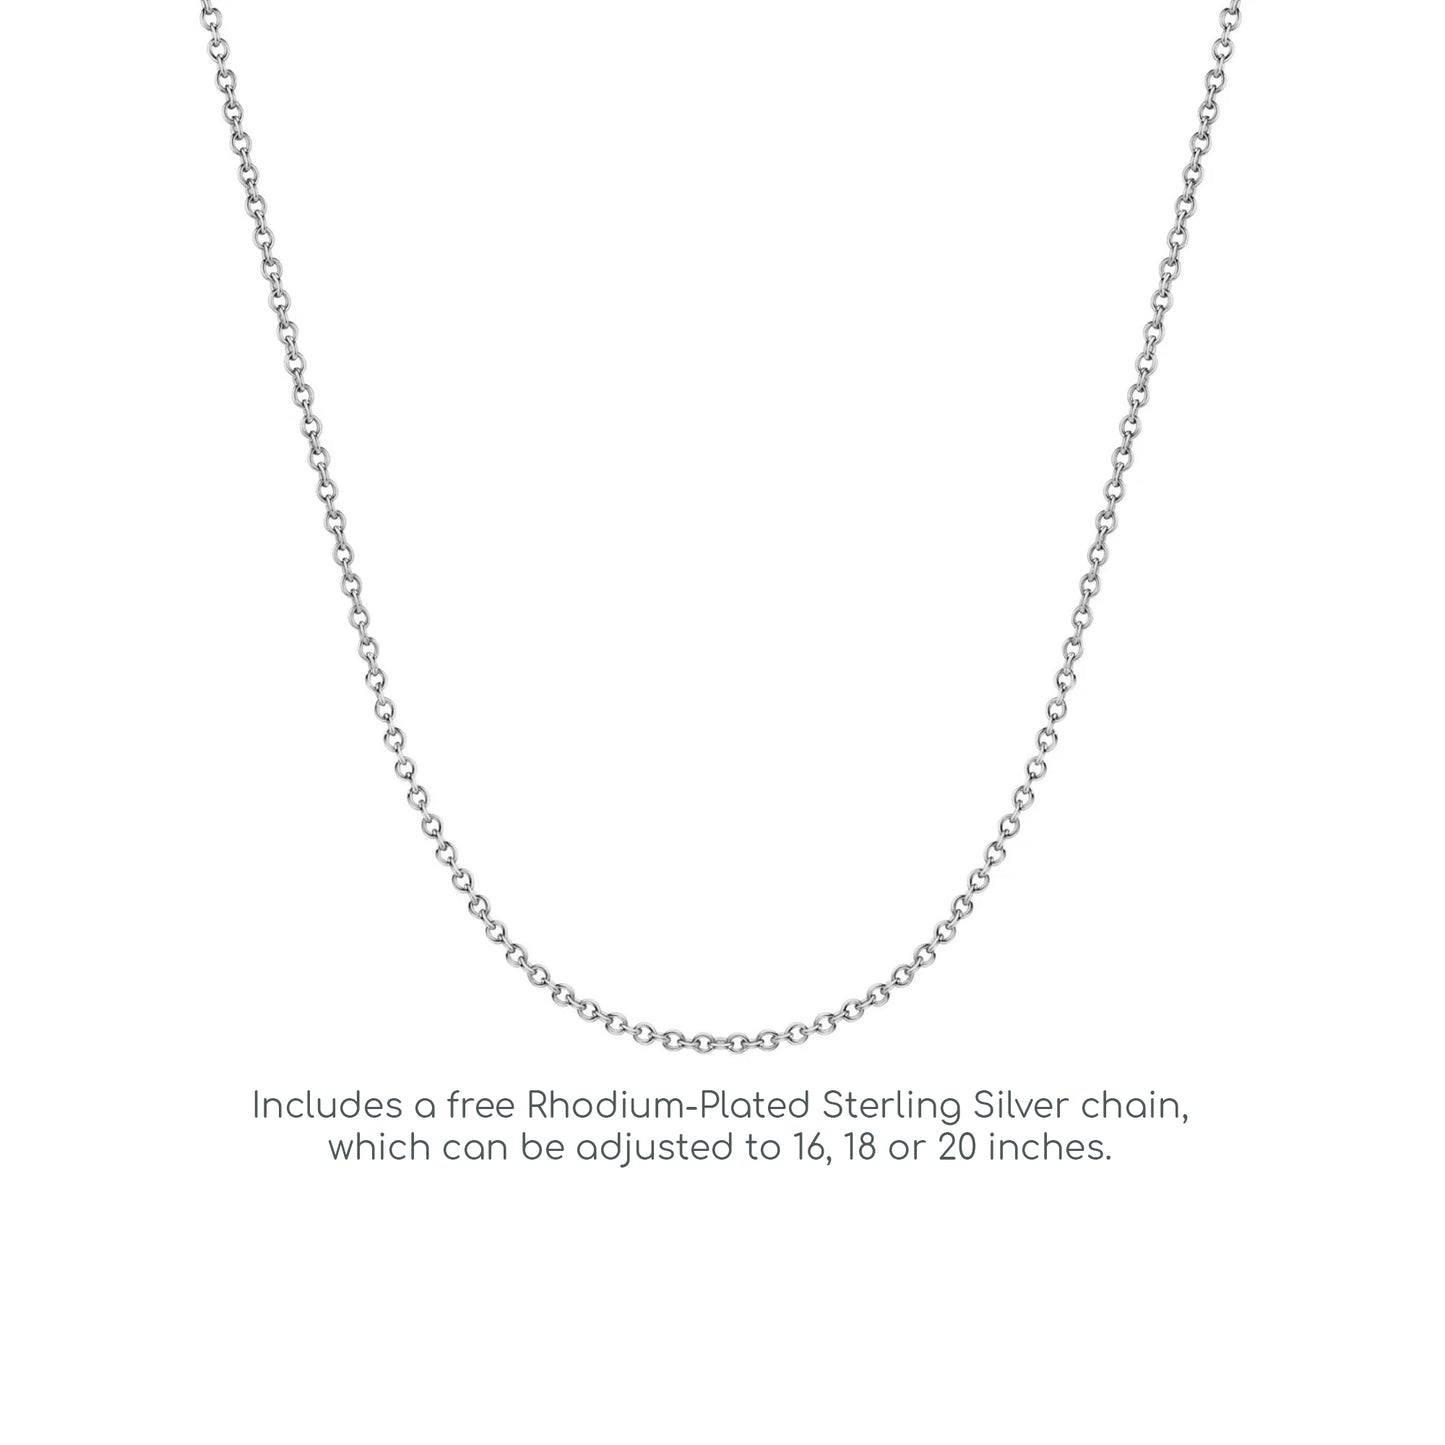 Silver  CZ Dual Love Heart Tag Charm Necklace 18 inch - SZP015